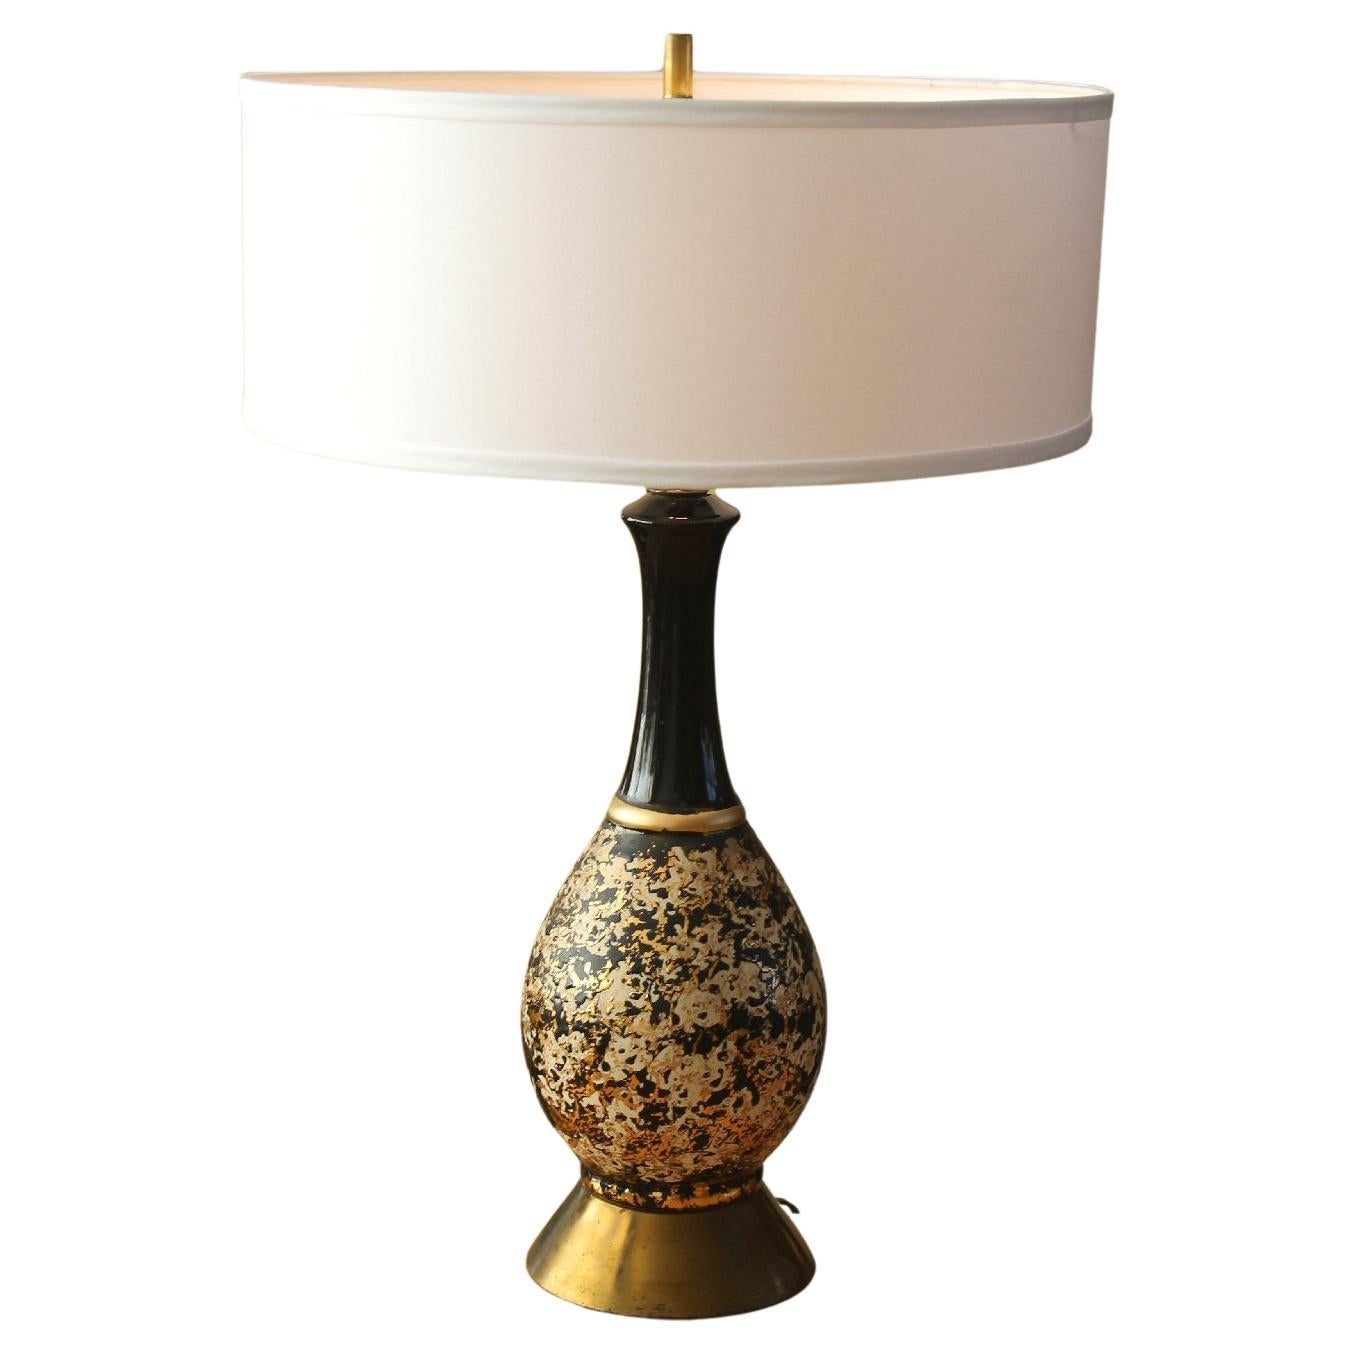 Glorious Mid Century Modern Atomic Table Lamp (lampe de table atomique). Noir Blanc Or 24kt 1950s